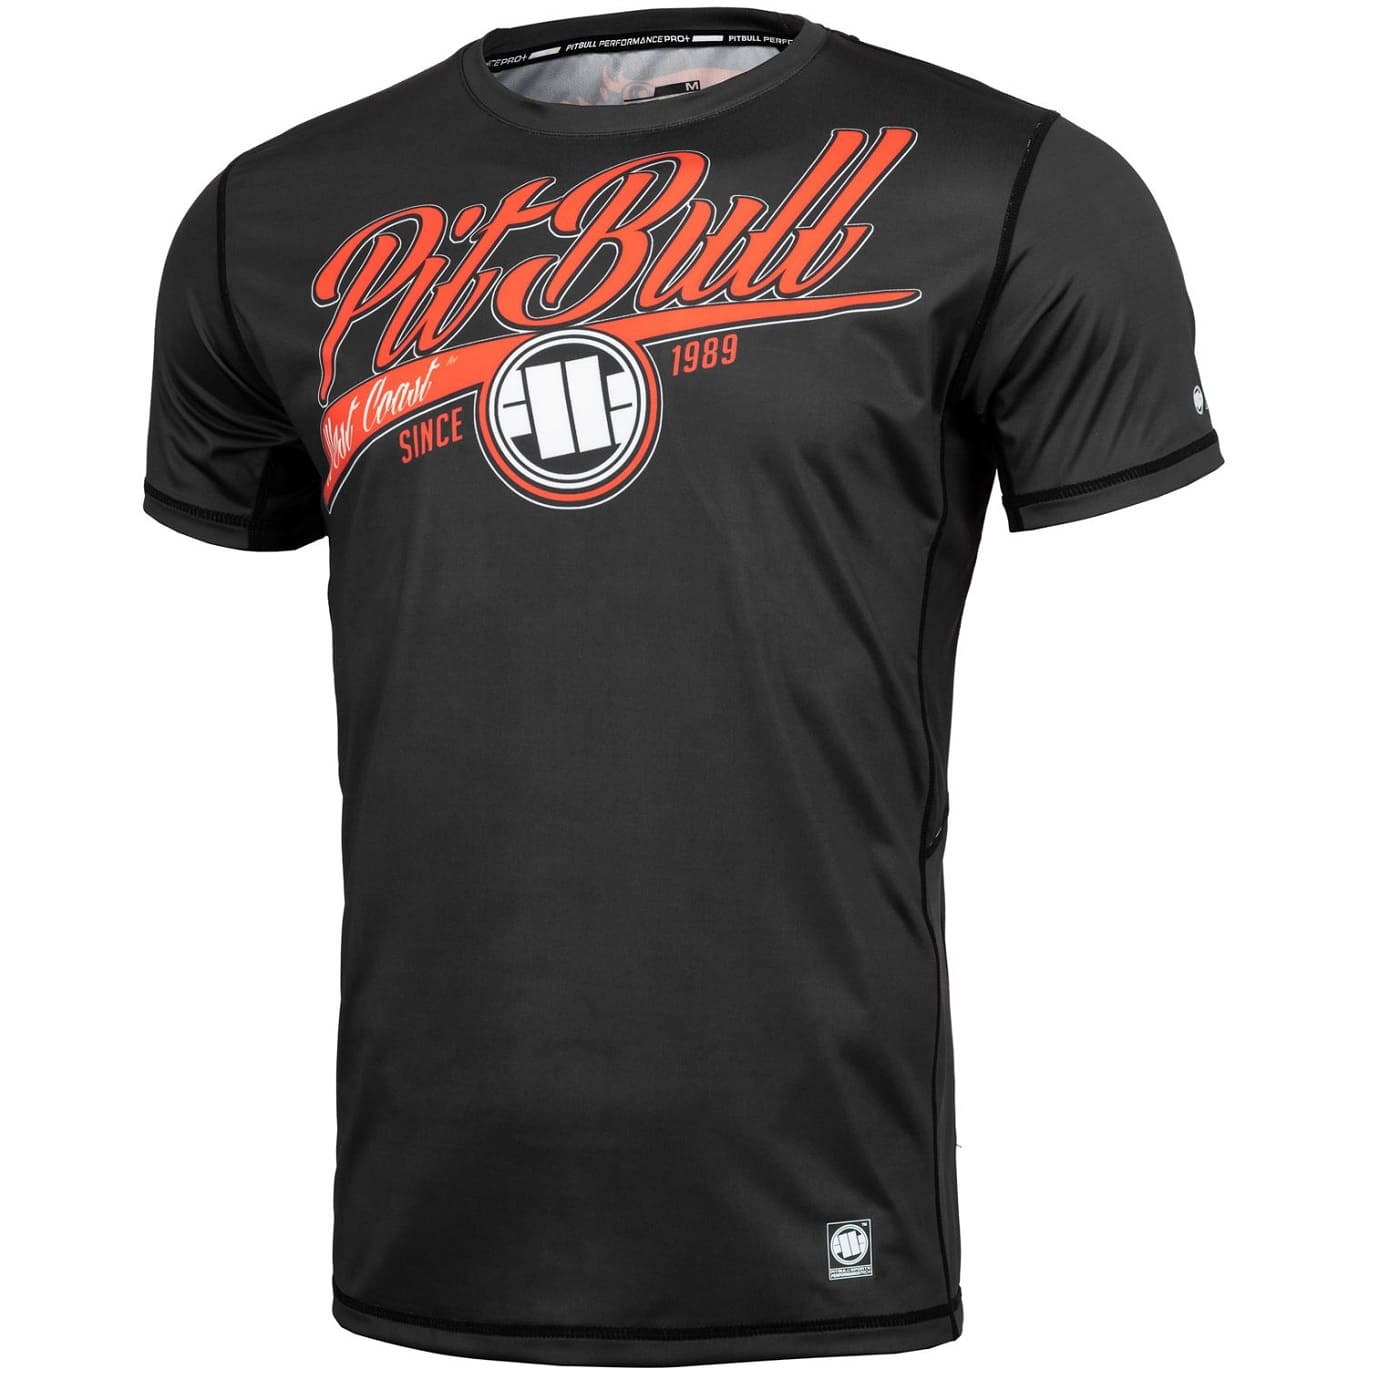 Pit Bull West Coast training shirt Mesh San-Diego III Fitness Sport T-Shirt 